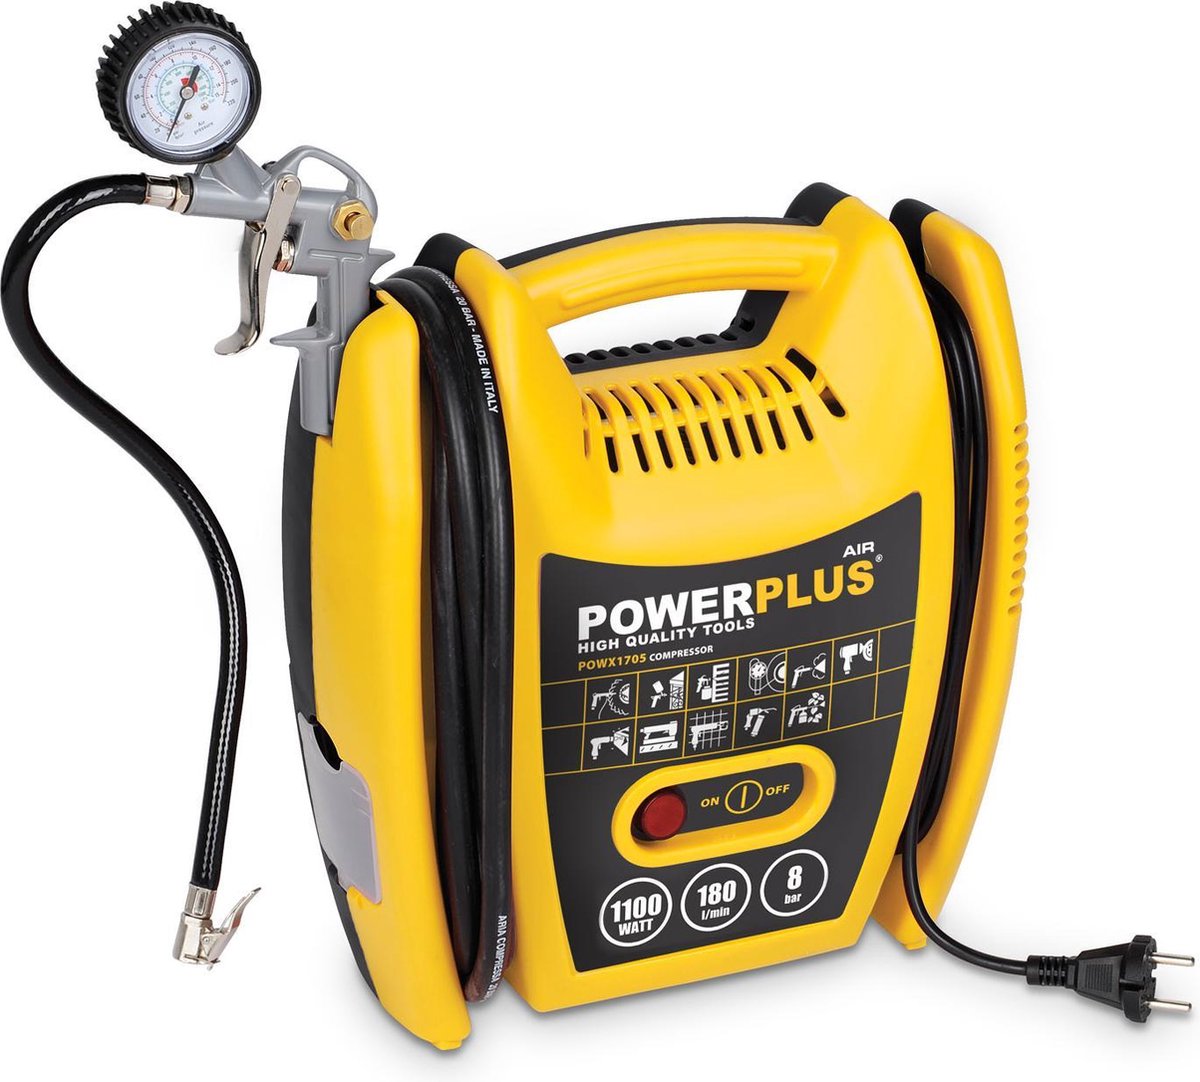 Powerplus POWX1705 Compressor - Luchtcompressor - 1100W - 8 bar - 3m slang - Incl. 8 accessoires - Powerplus